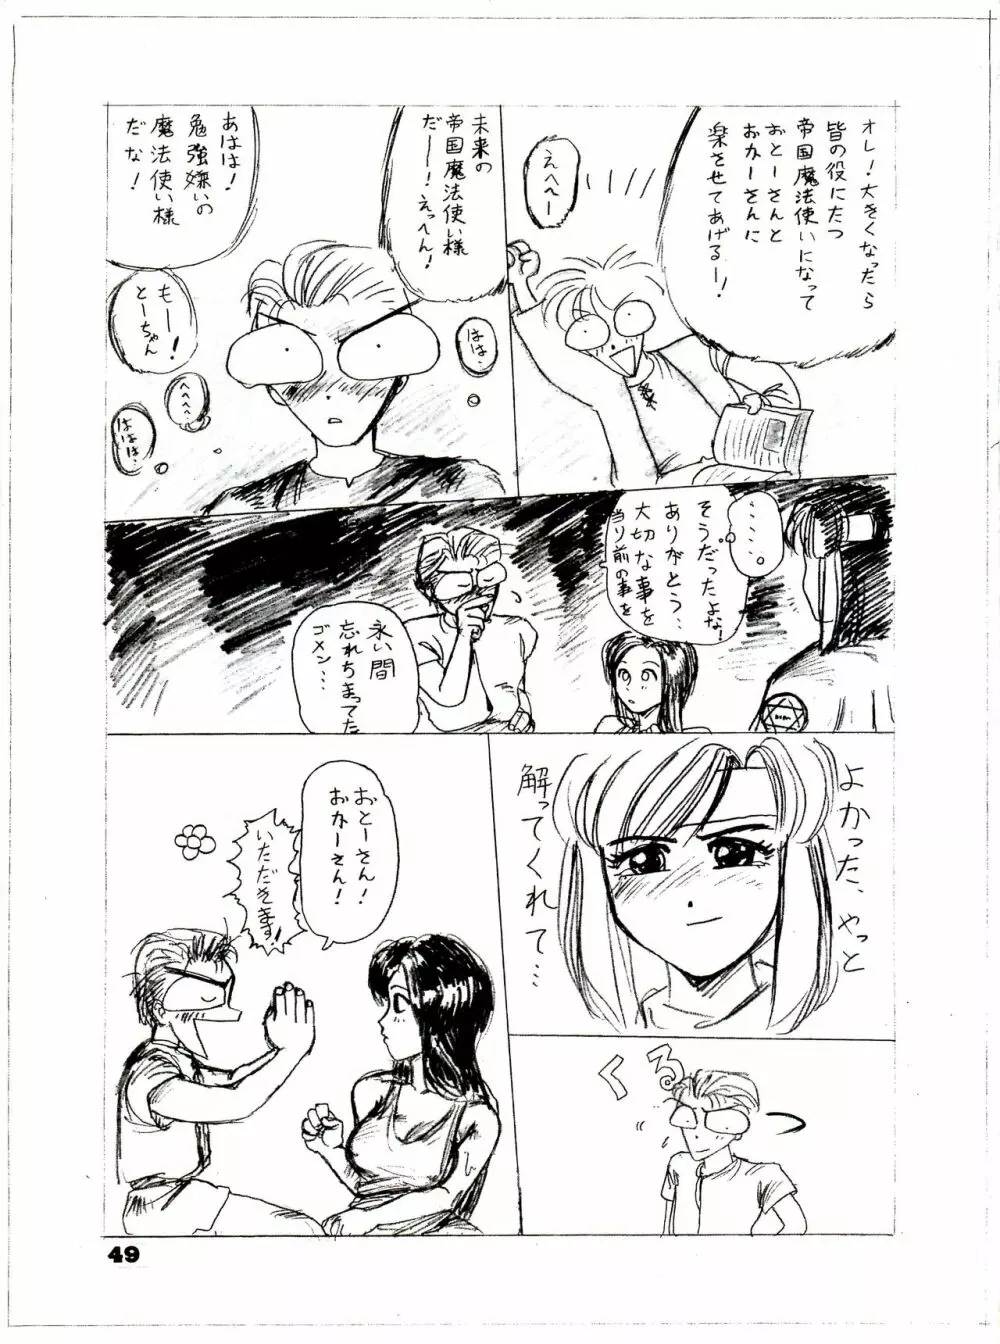 THE SECRET OF 血祭屋 番外編 vol.1 えんぴつ画研究室 - page49